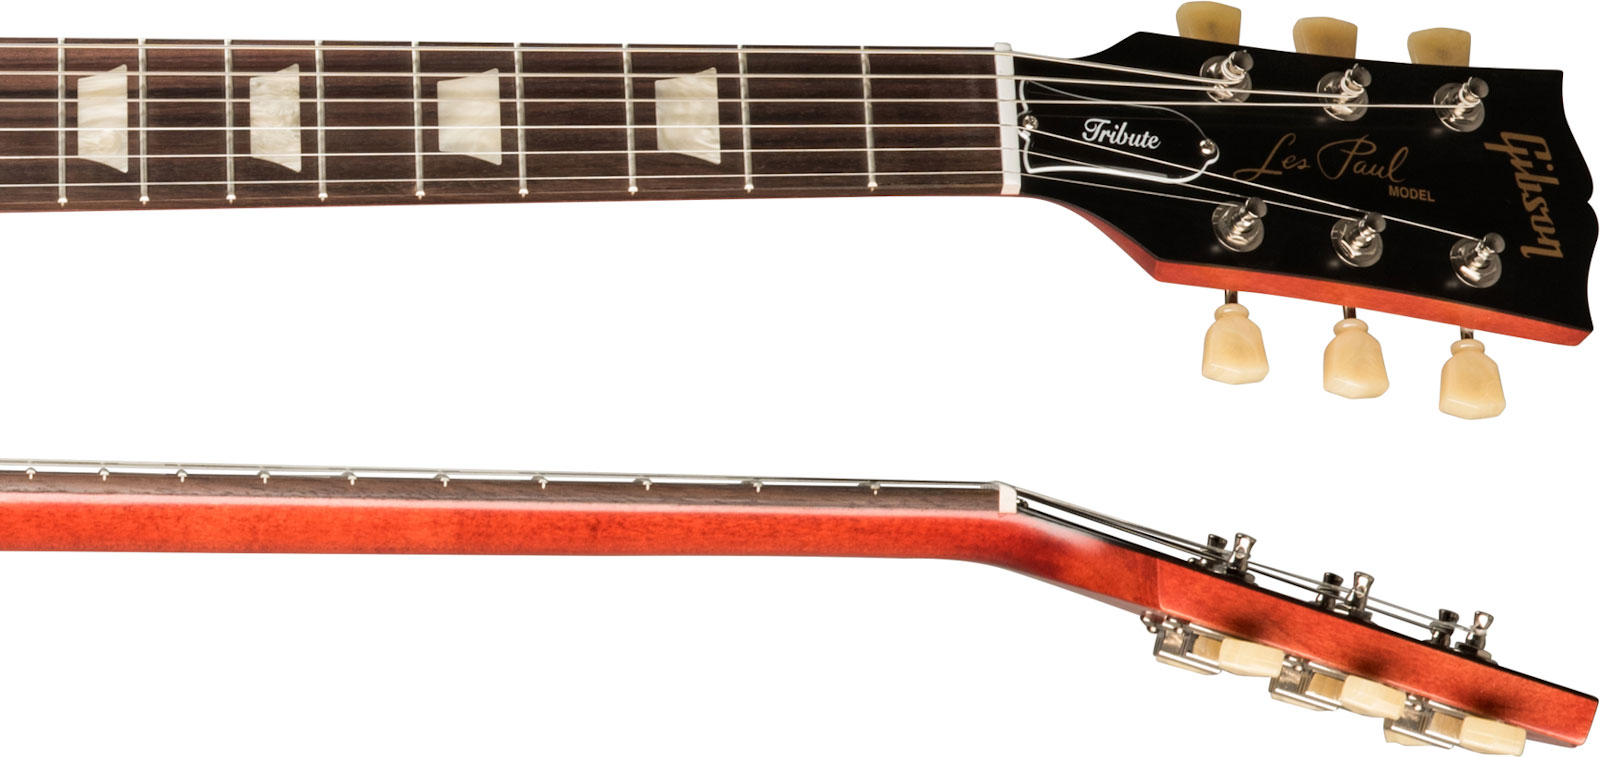 Gibson Les Paul Tribute Modern 2h Ht Rw - Satin Cherry Sunburst - Enkel gesneden elektrische gitaar - Variation 3